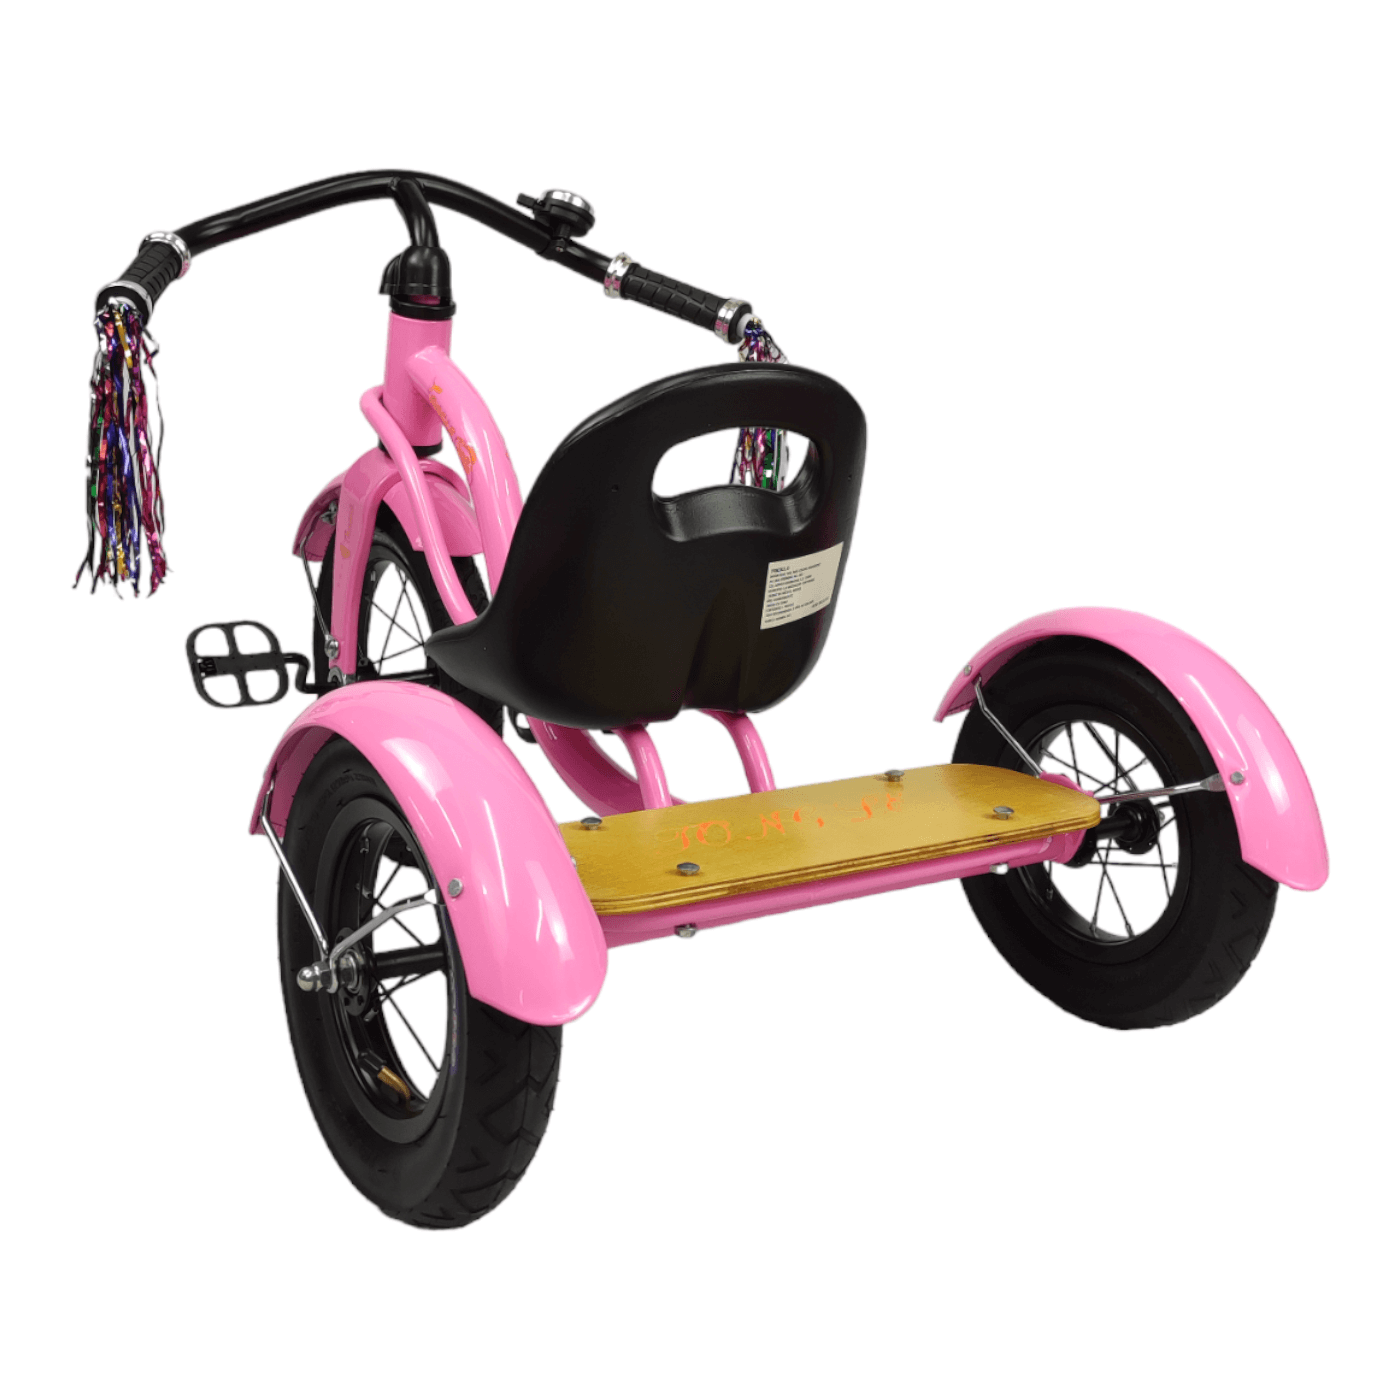 Timbre infantil rosa - Albert motos bicis . com